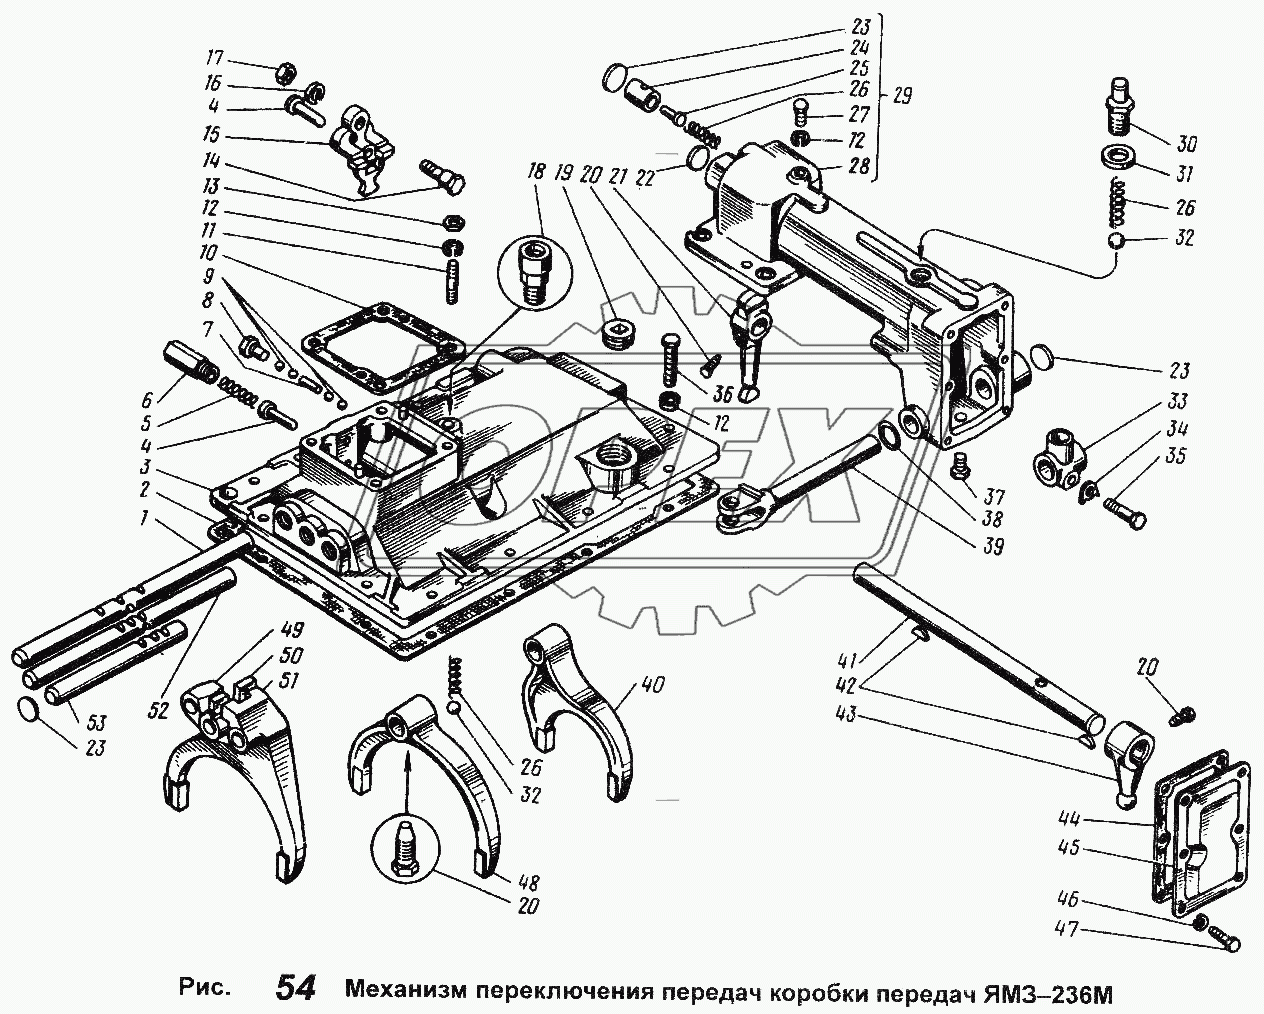 Механизм переключения передач коробки передач ЯМЗ-236М